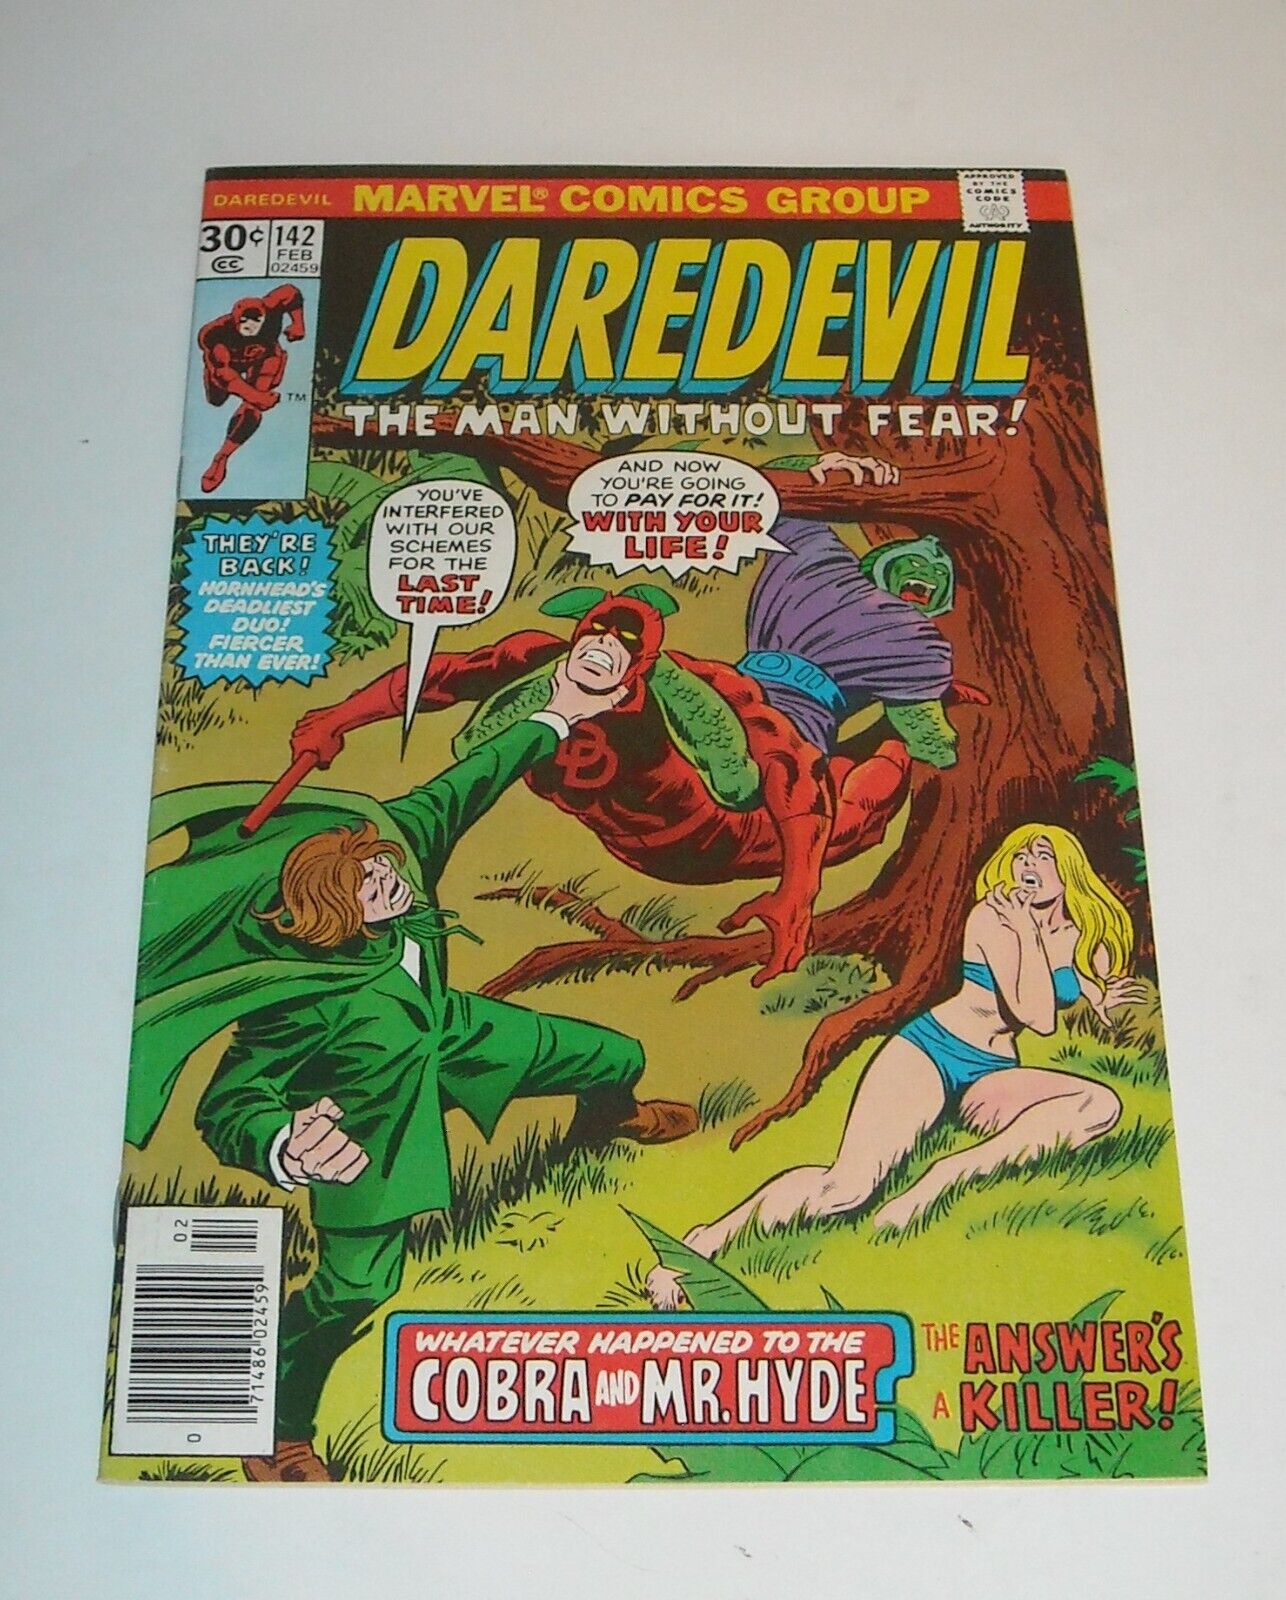 DAREDEVIL # 142 MARVEL COMICS February 1977 early BULLSEYE APPEARANCE COBRA HYDE